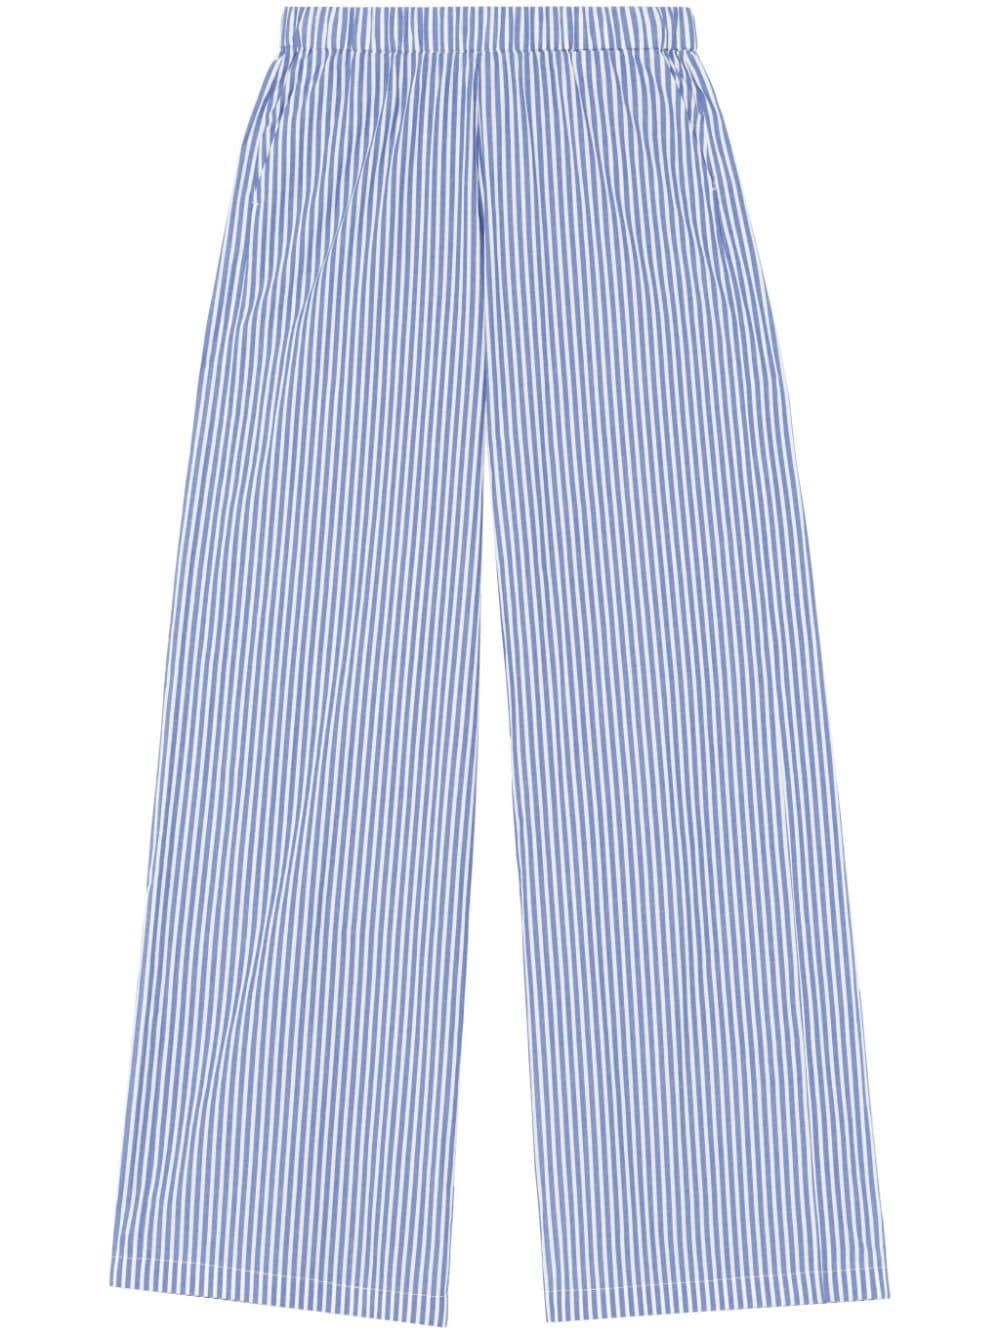 John Elliott Leisure striped cotton trousers - Blue von John Elliott